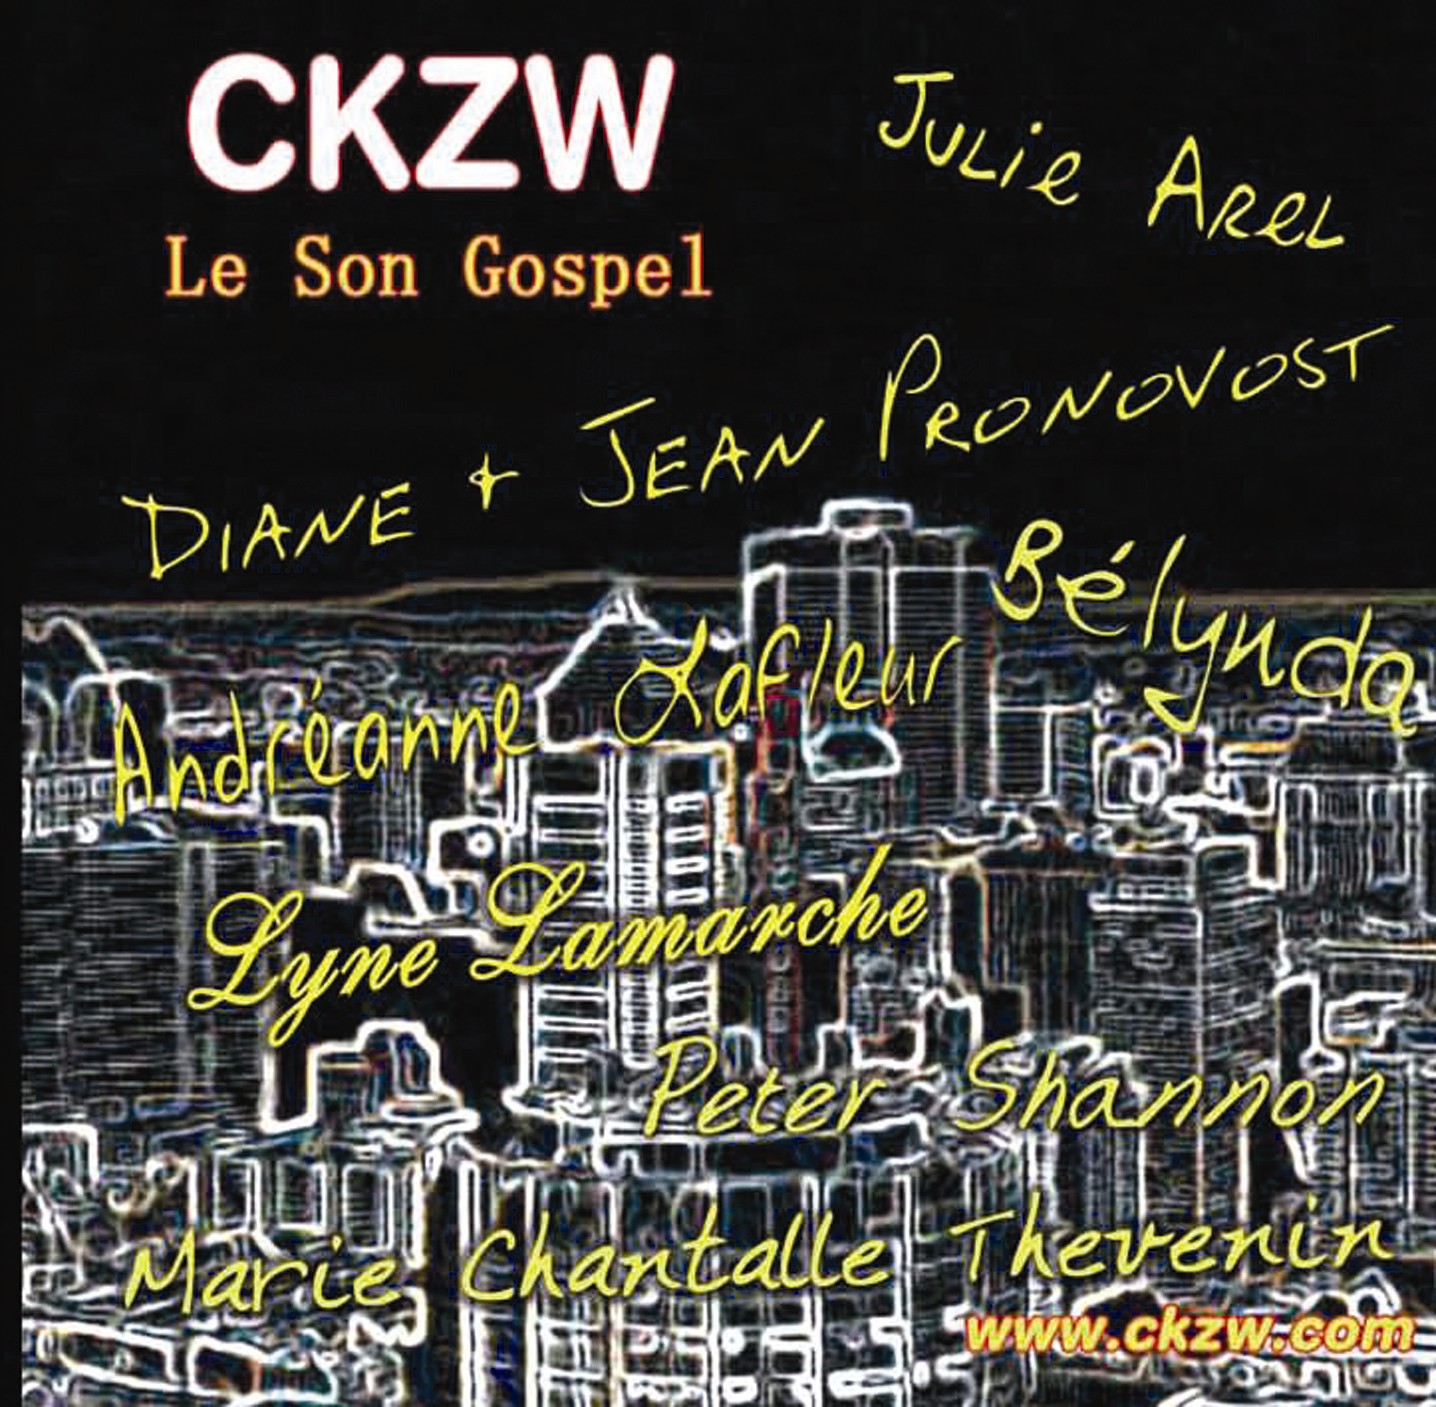 album ckzw